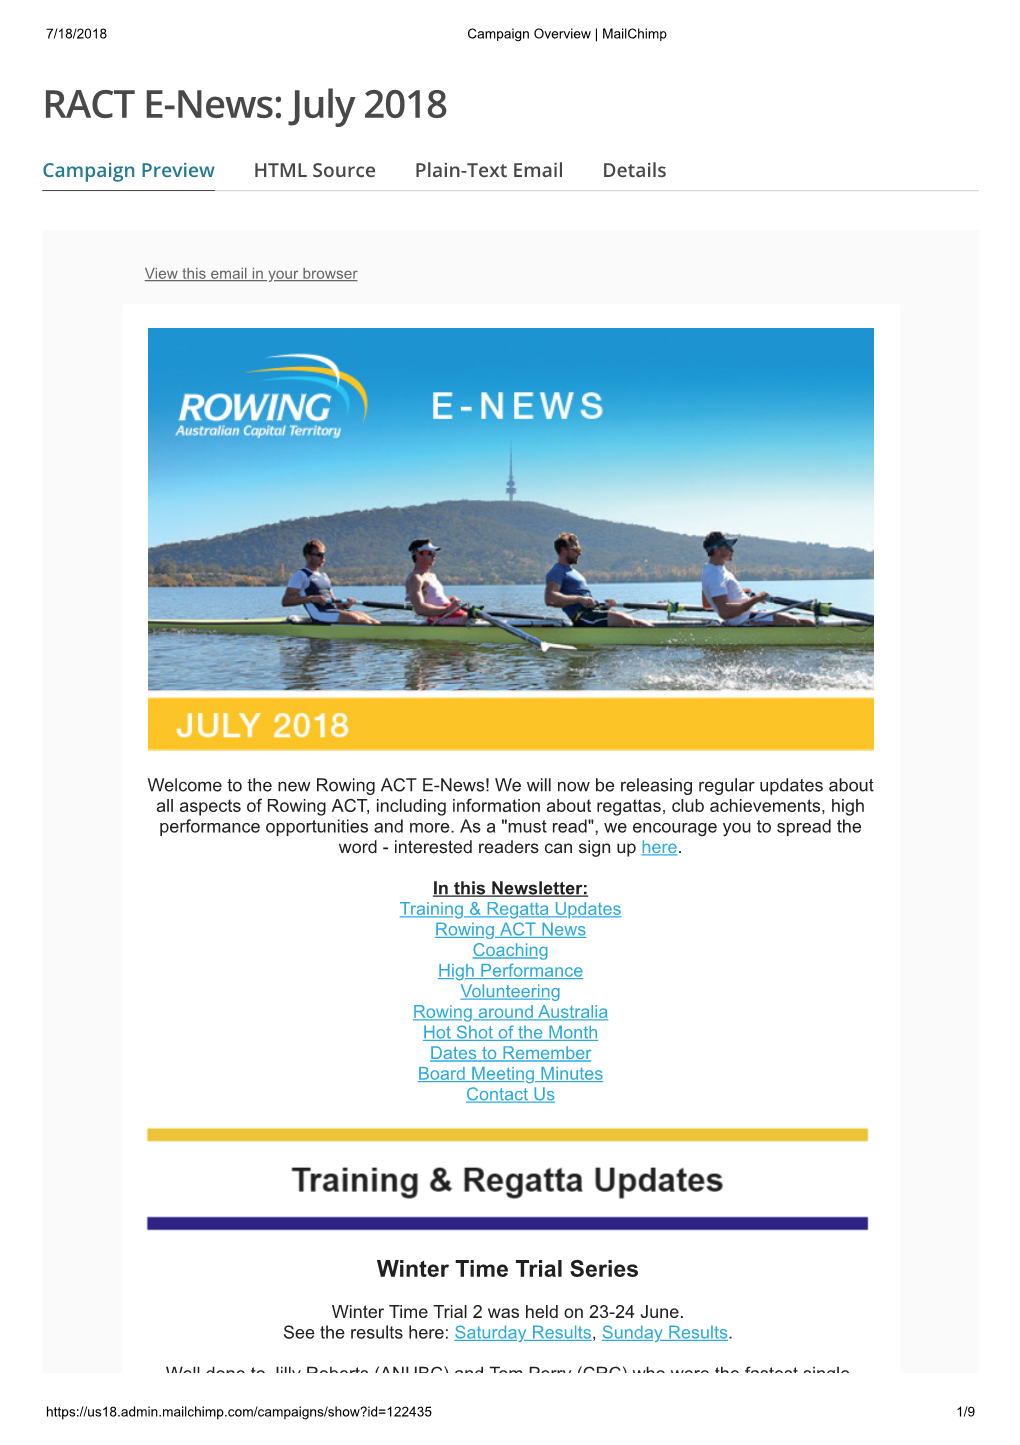 RACT E-News: July 2018